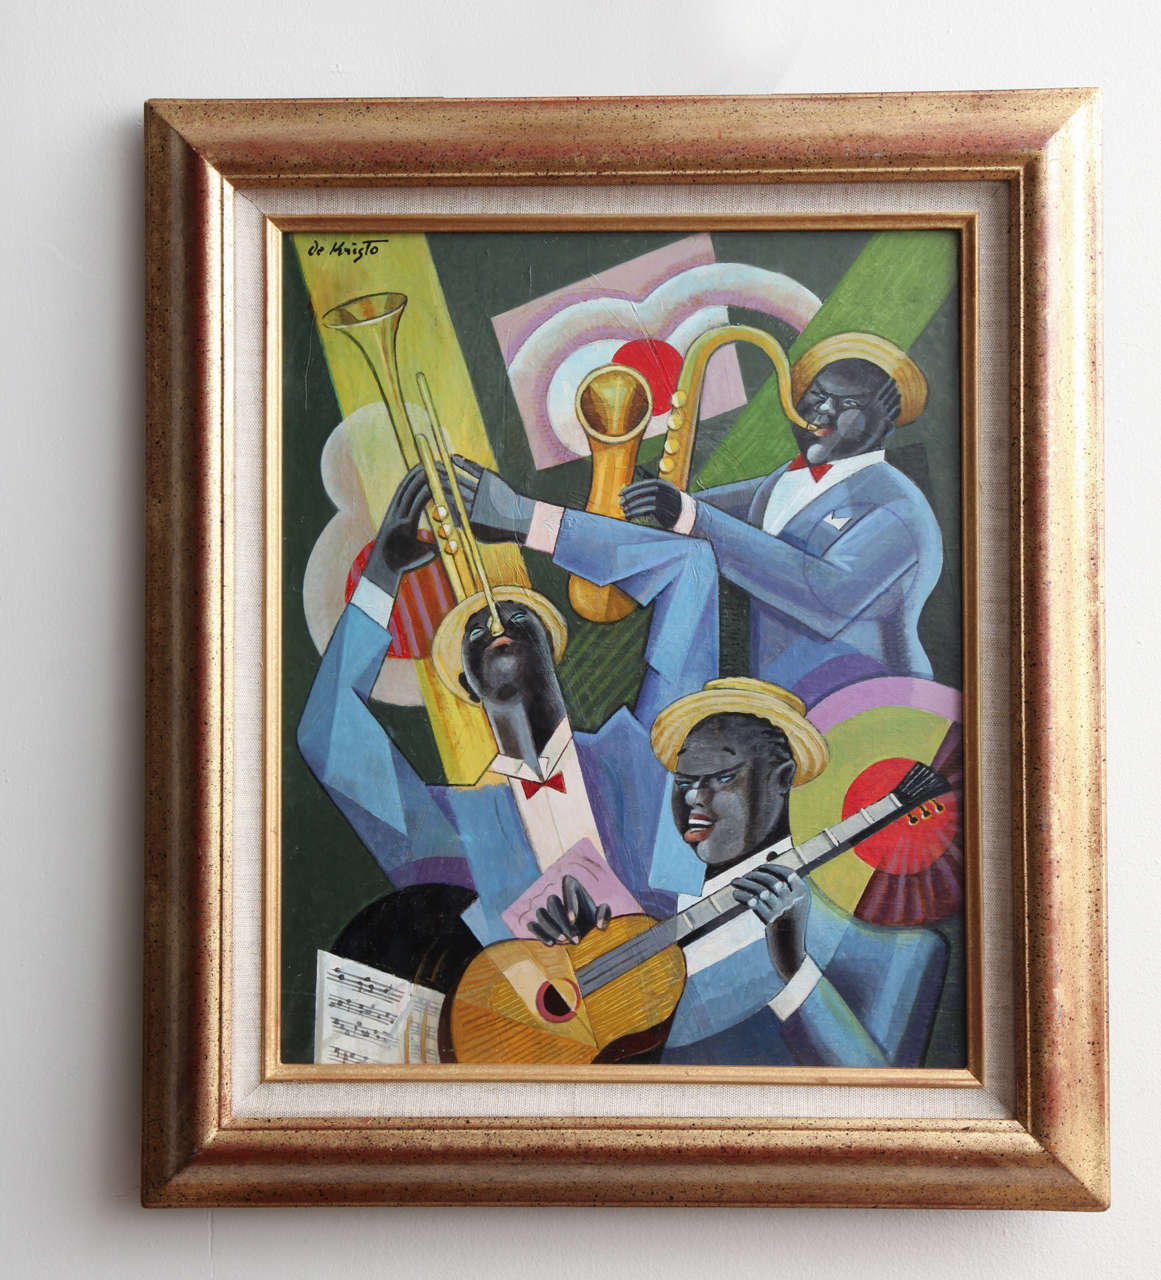 Bela De Kristo (1920-2006) oil on canvas, "Jazz Trio"
signed upper left, dimensions: 18.1 in (46 cm) x 14.6 in (37 cm).